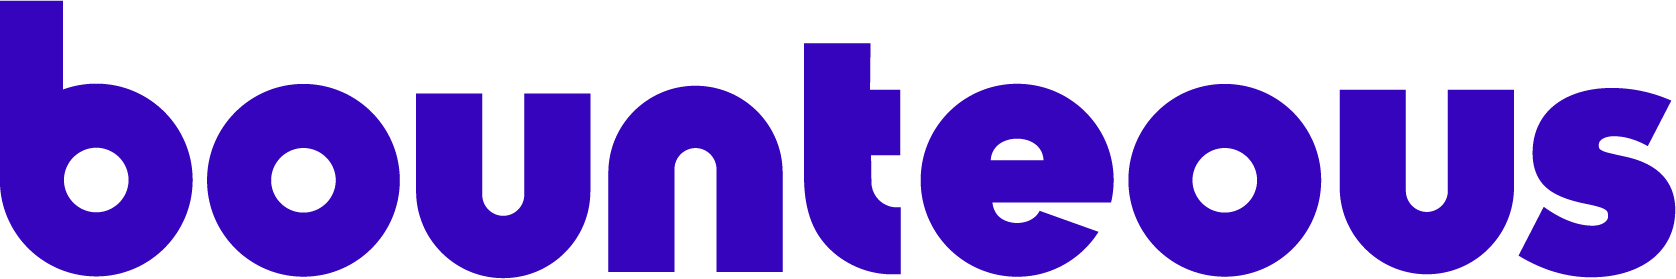 Bounteous Company Logo